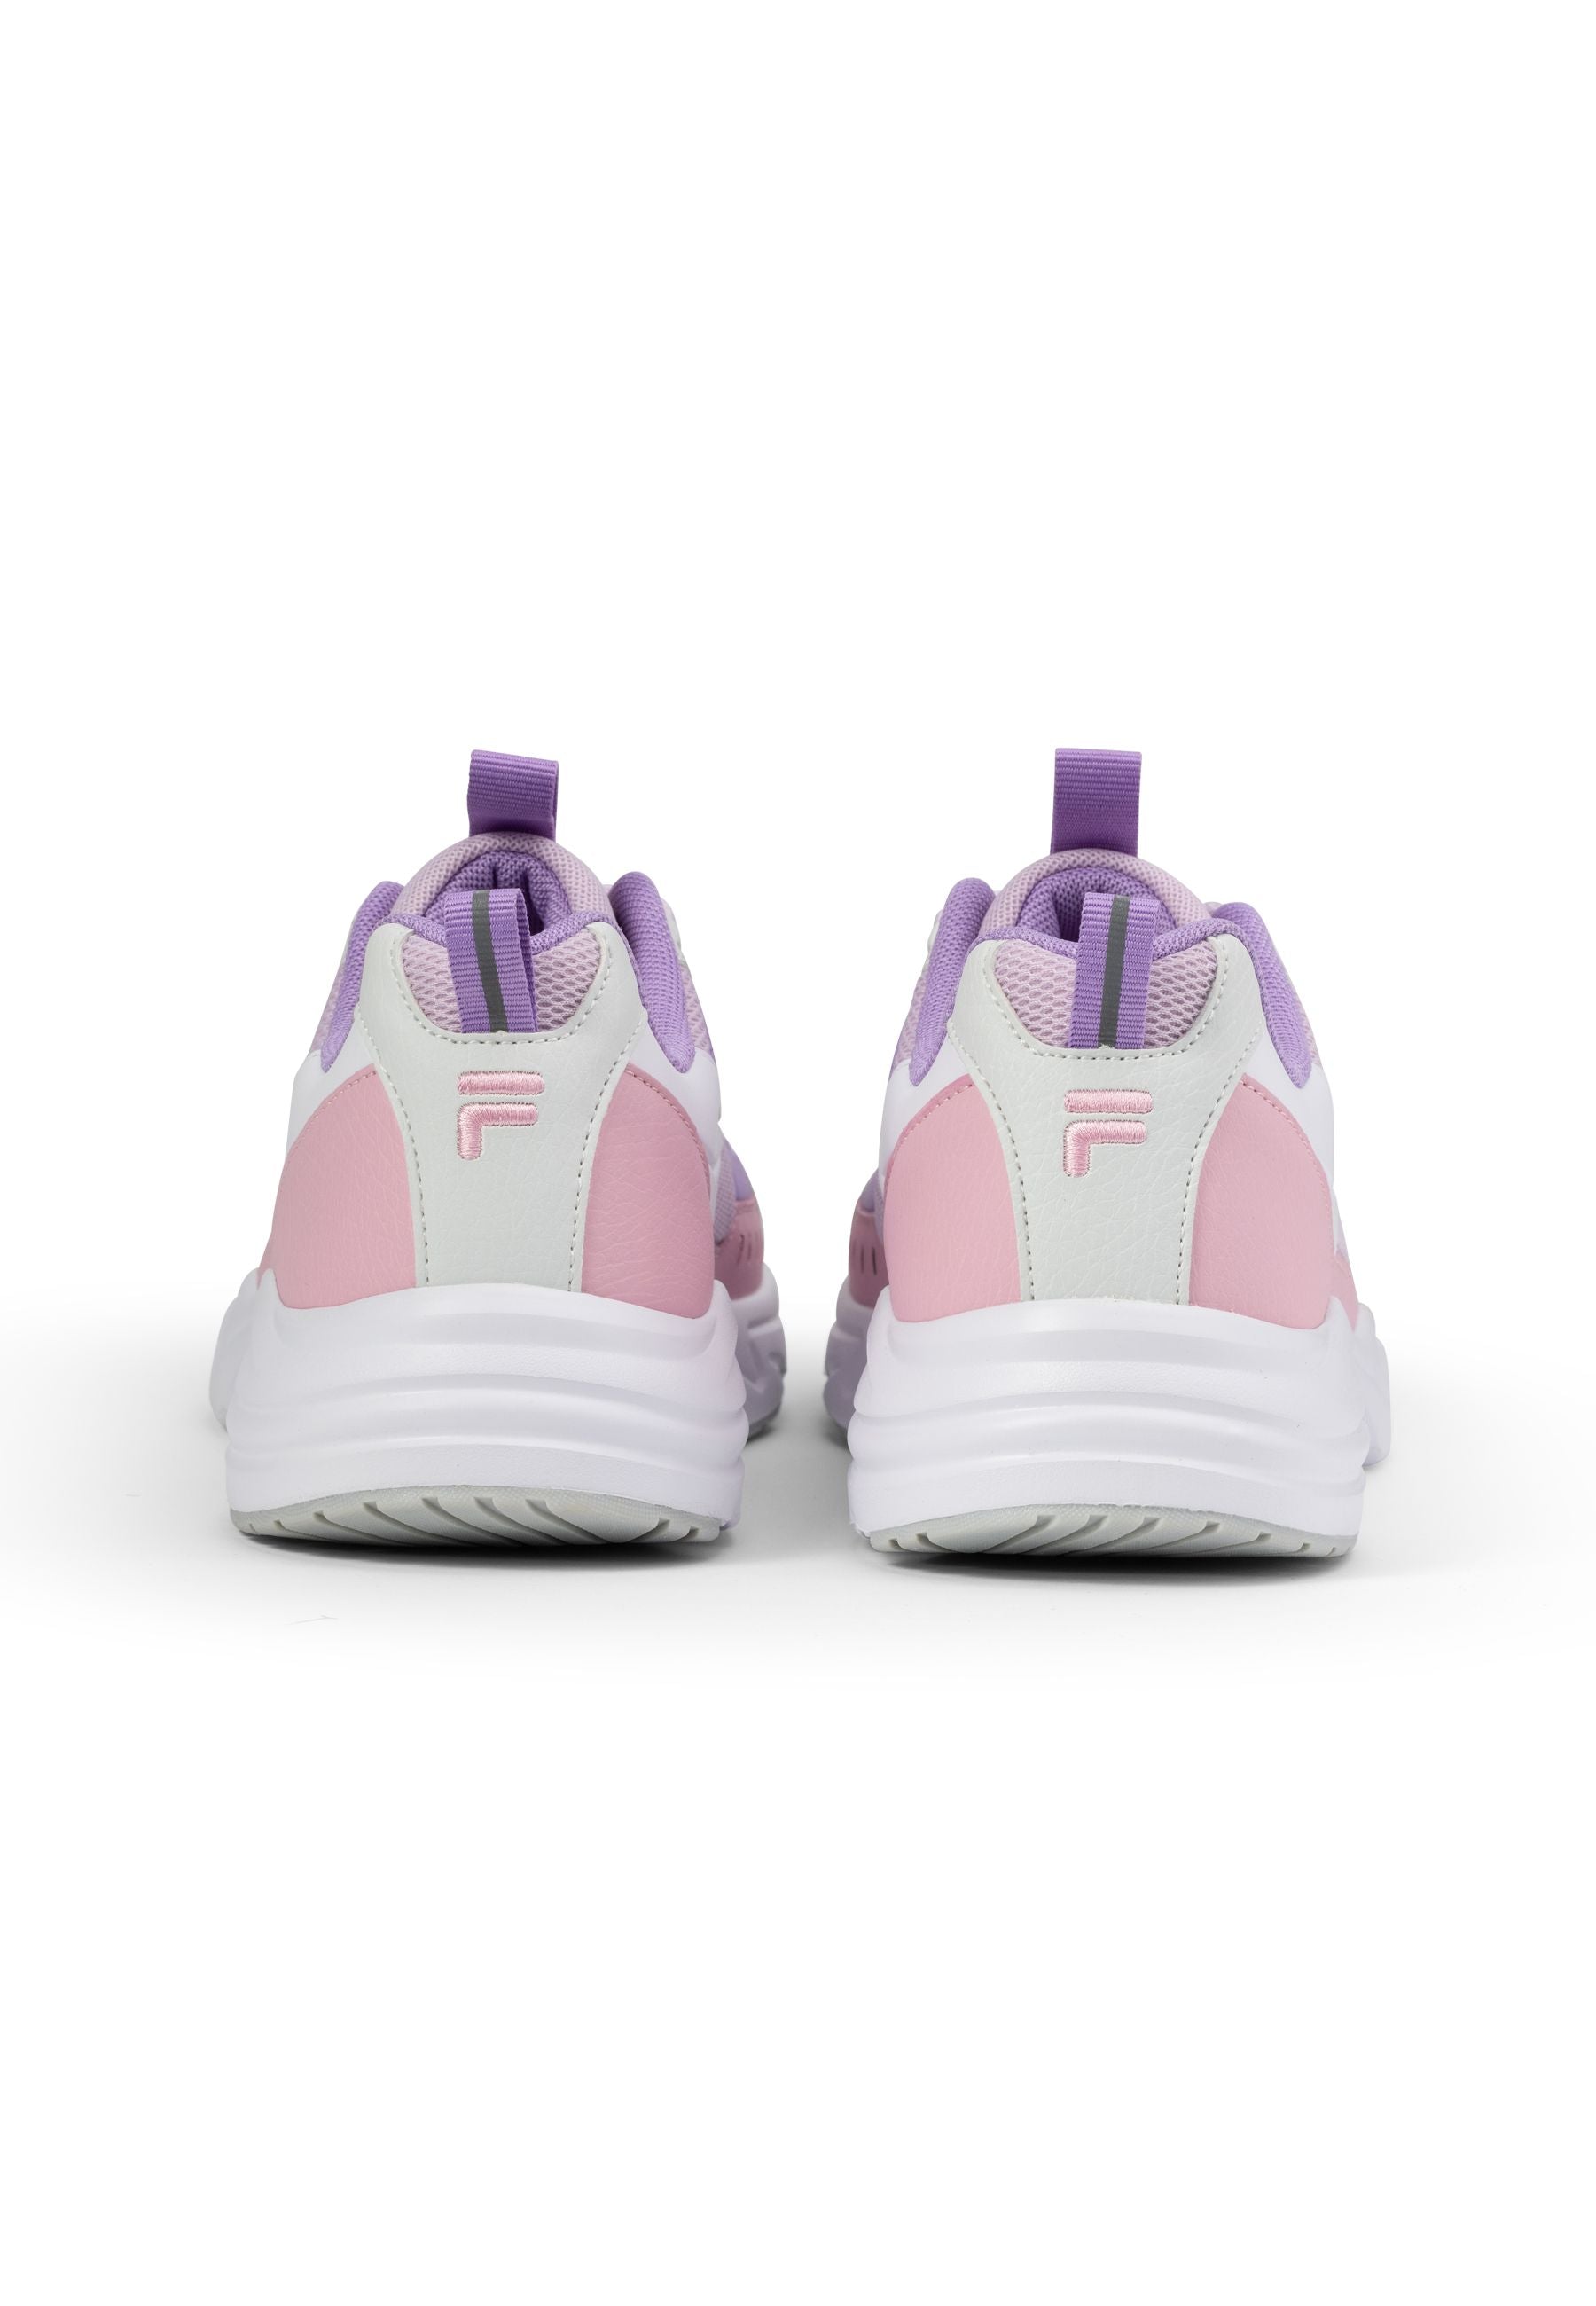 Fila Vittori Wmn in Lavender Fog-Viola Sneakers Fila   